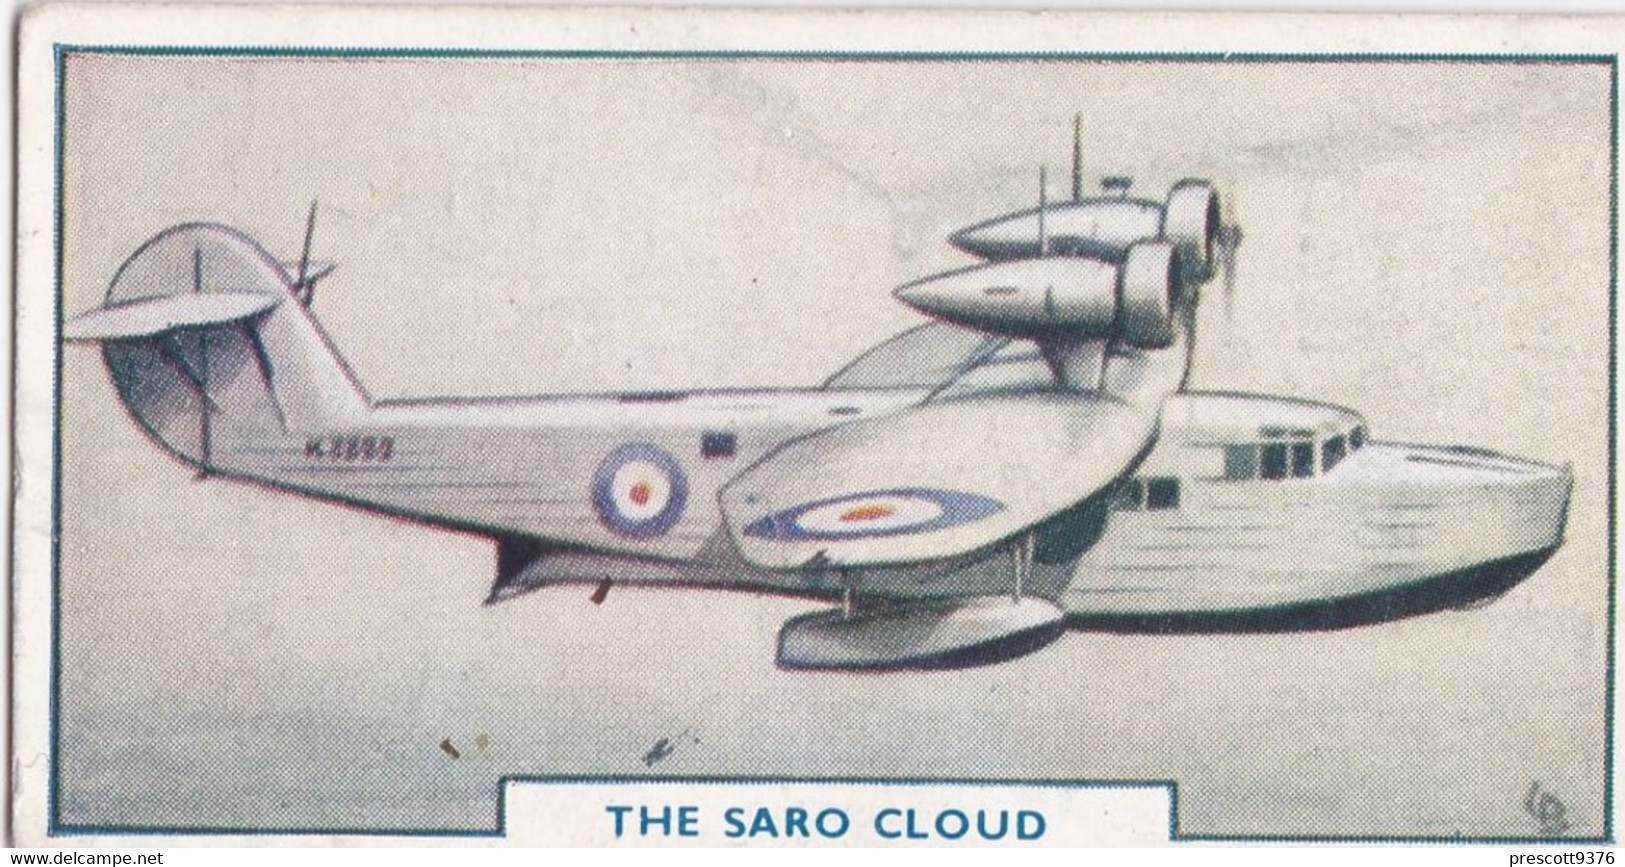 19 Saro Cloud - Aircraft Series 1938 - Godfrey Phillips Cigarette Card - Original - Military - Travel - Phillips / BDV